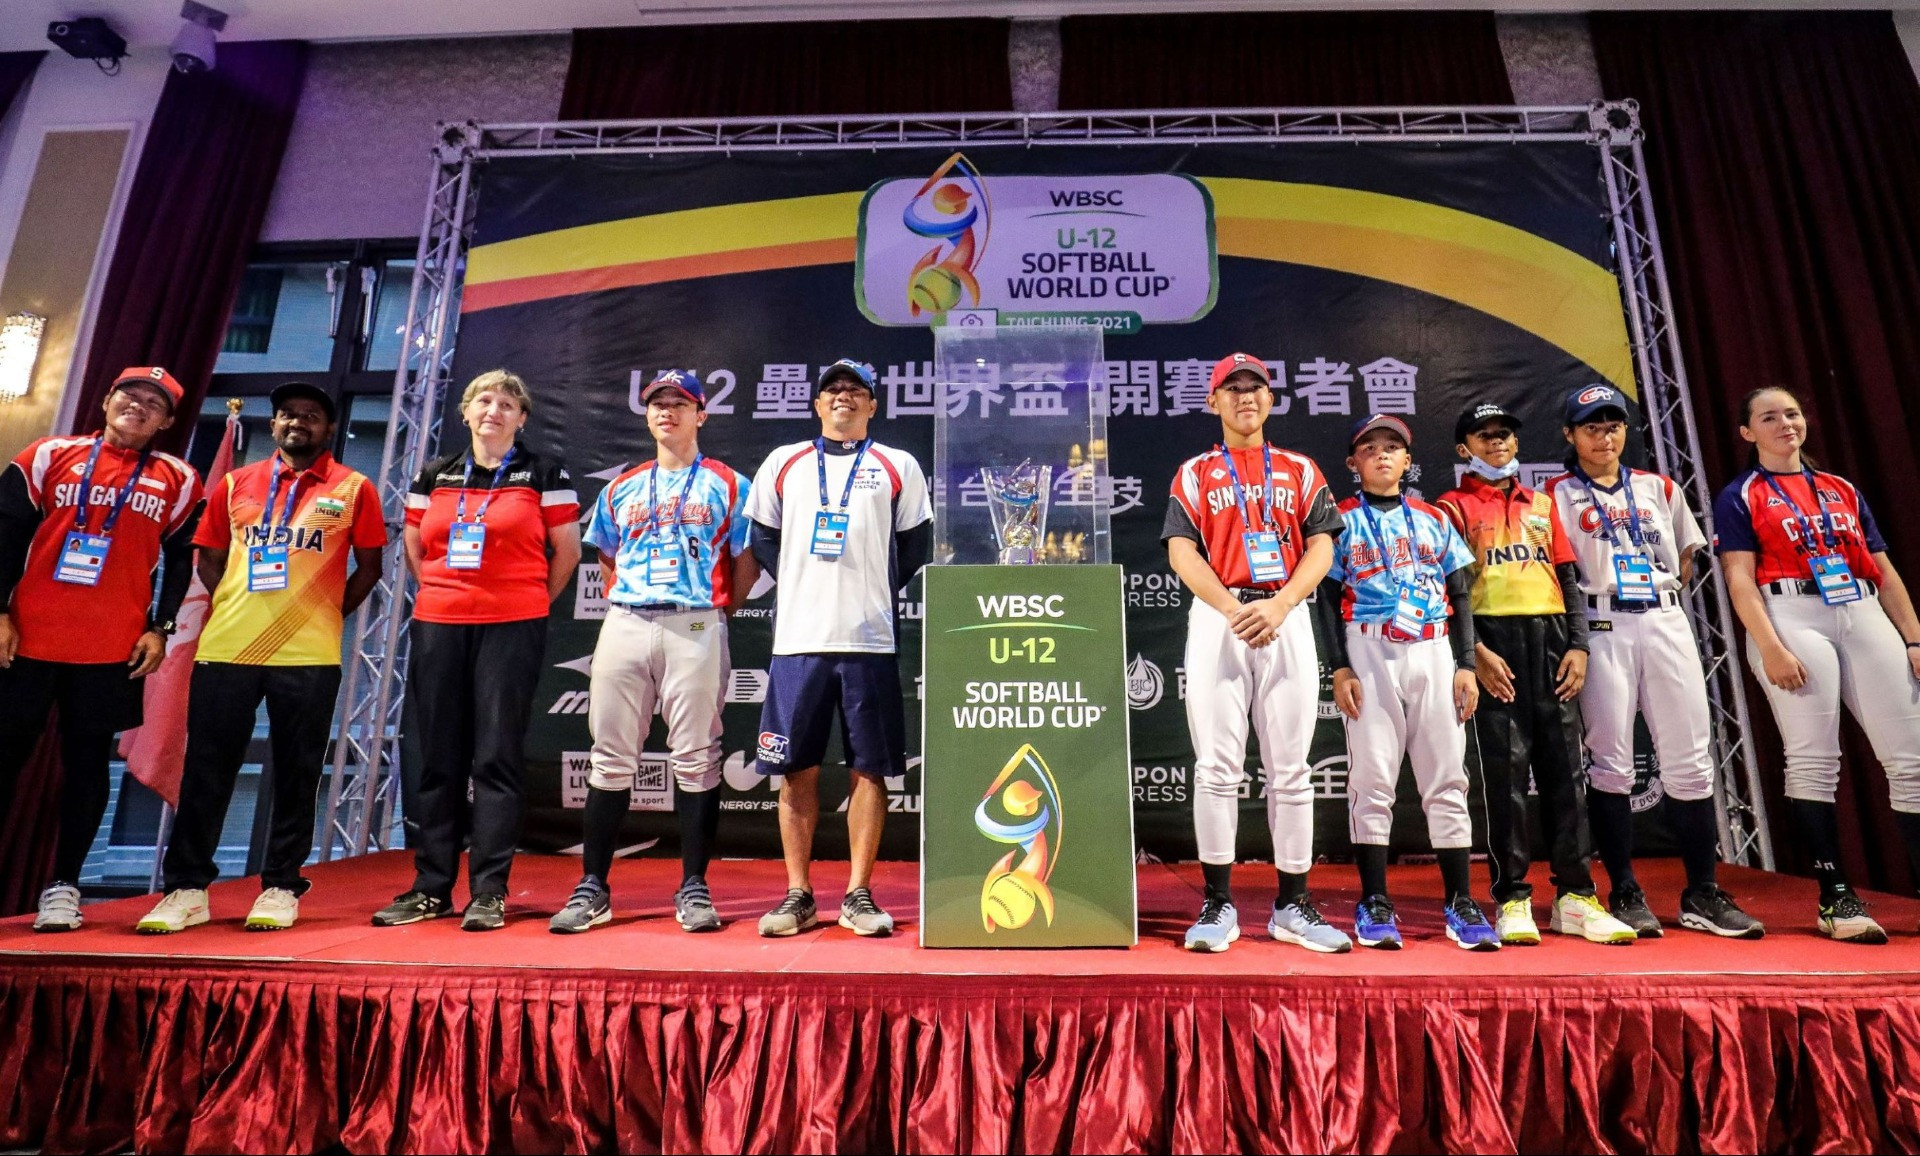 Chinese Taipei seeking home glory at WBSC Under-12 Mixed Softball World Cup